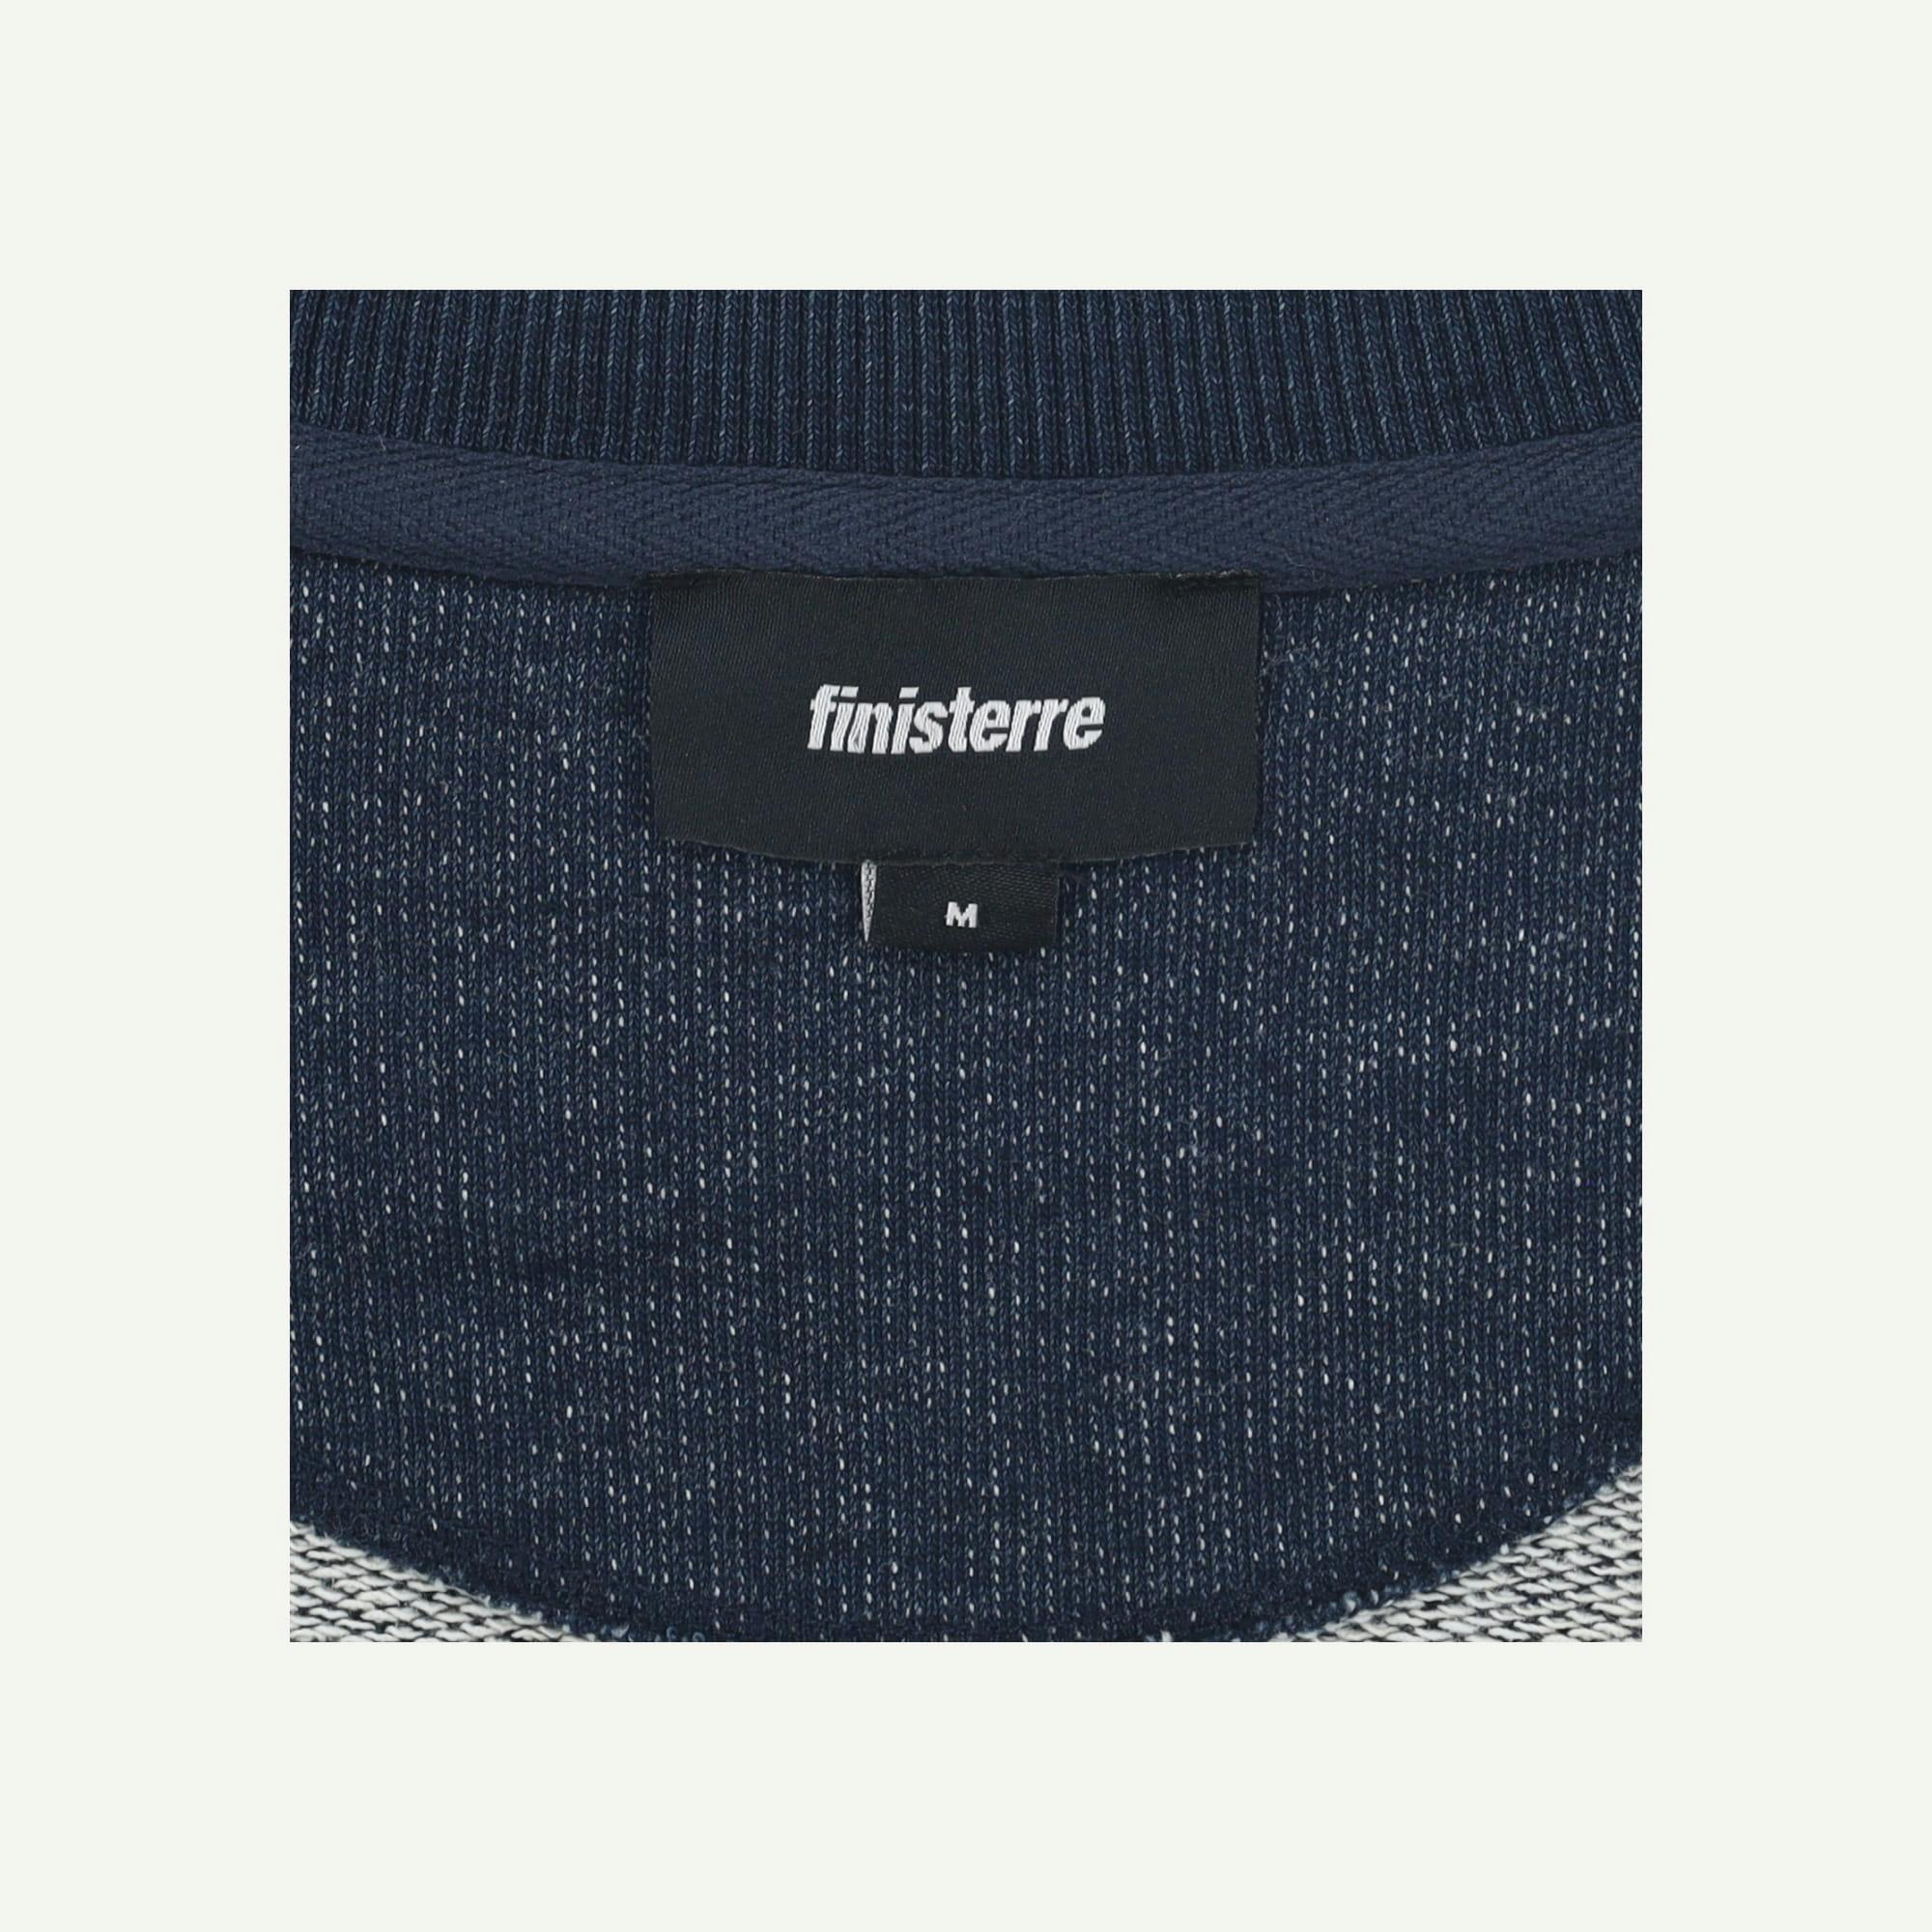 Finisterre As new Blue Sweatshirt